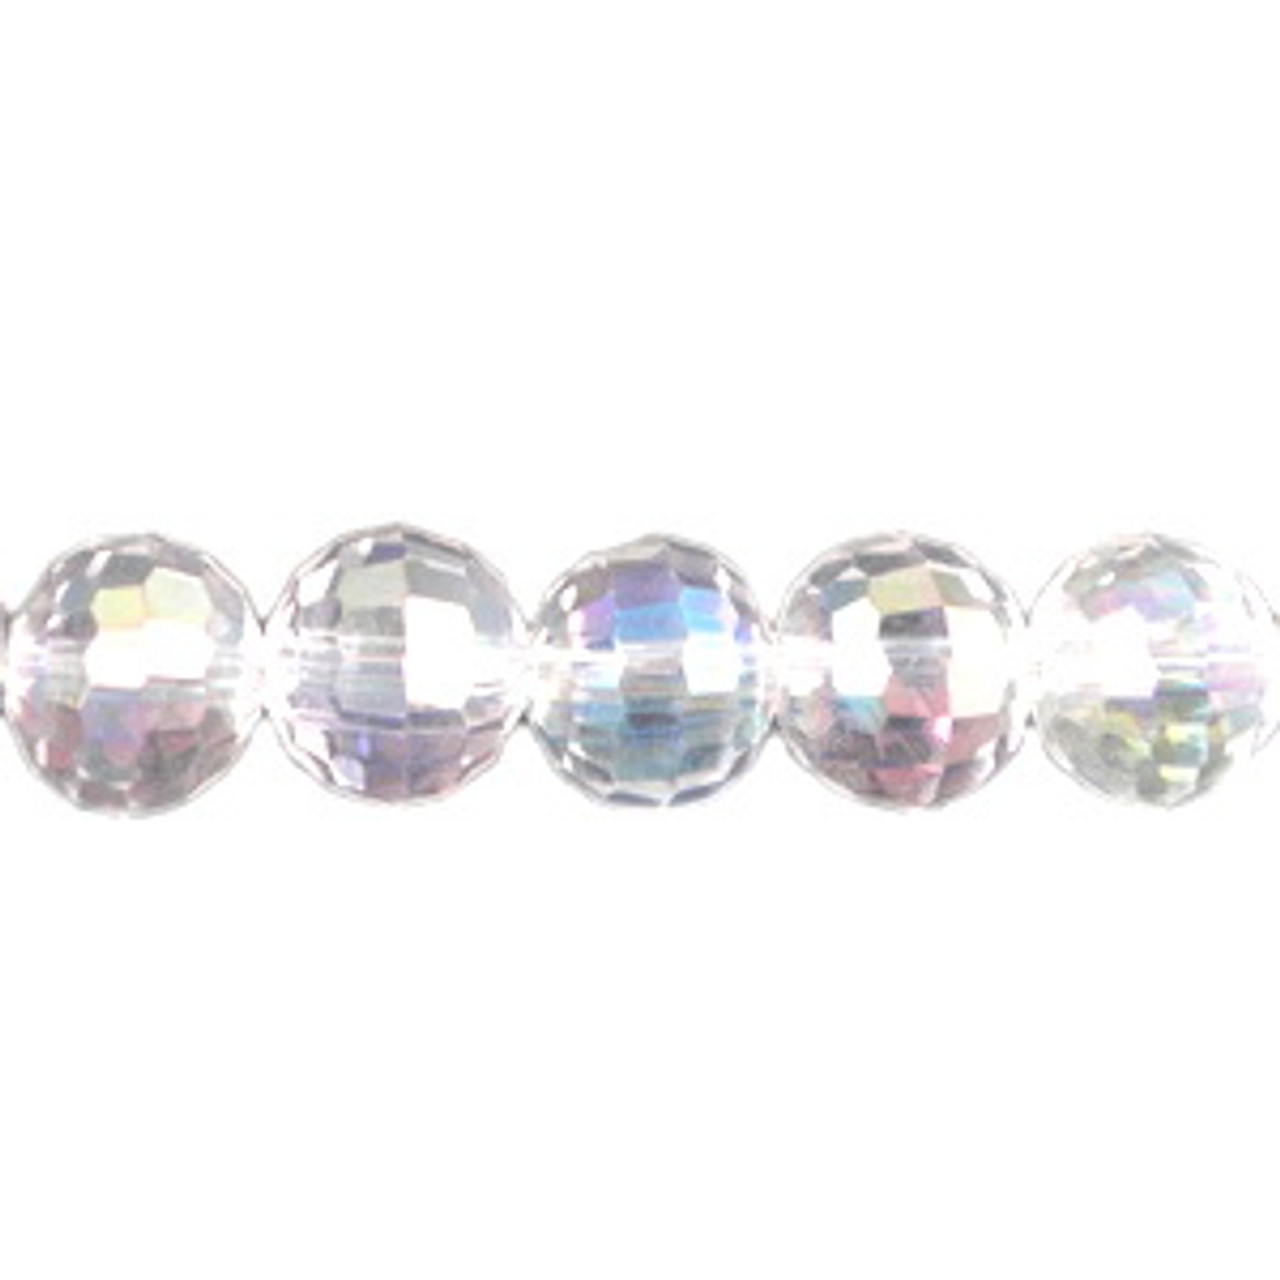 10mm 96 Cut Crystal AB Thunder Polish Round Beads (40 Beads)